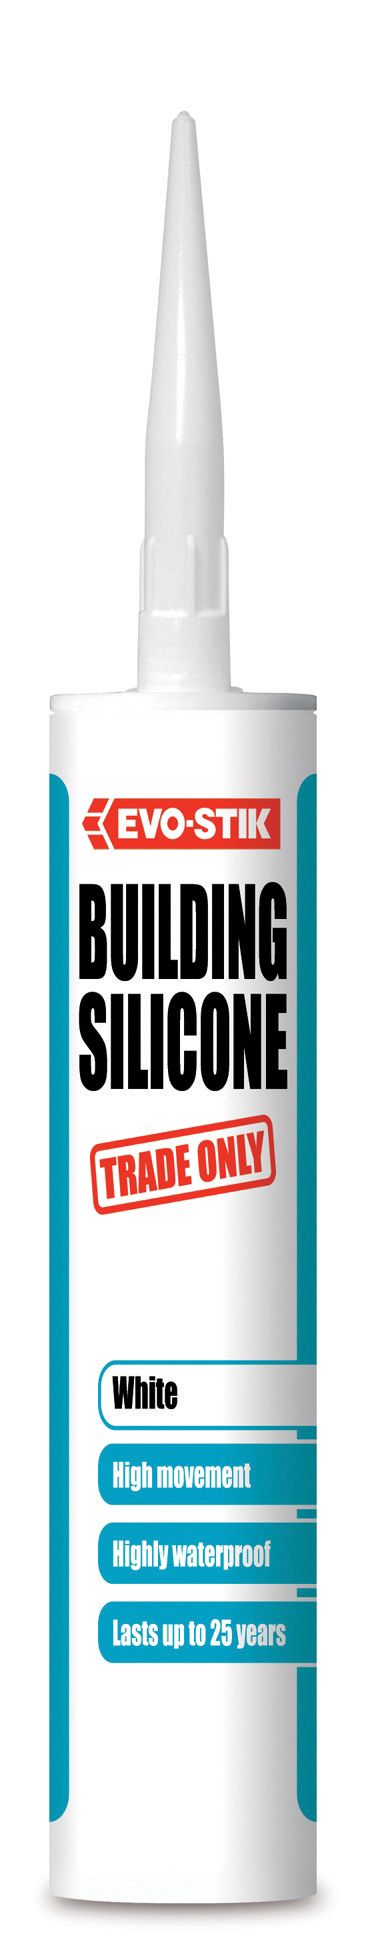 Image of Evo-Stik Building Silicone Sealant - White - 280ml